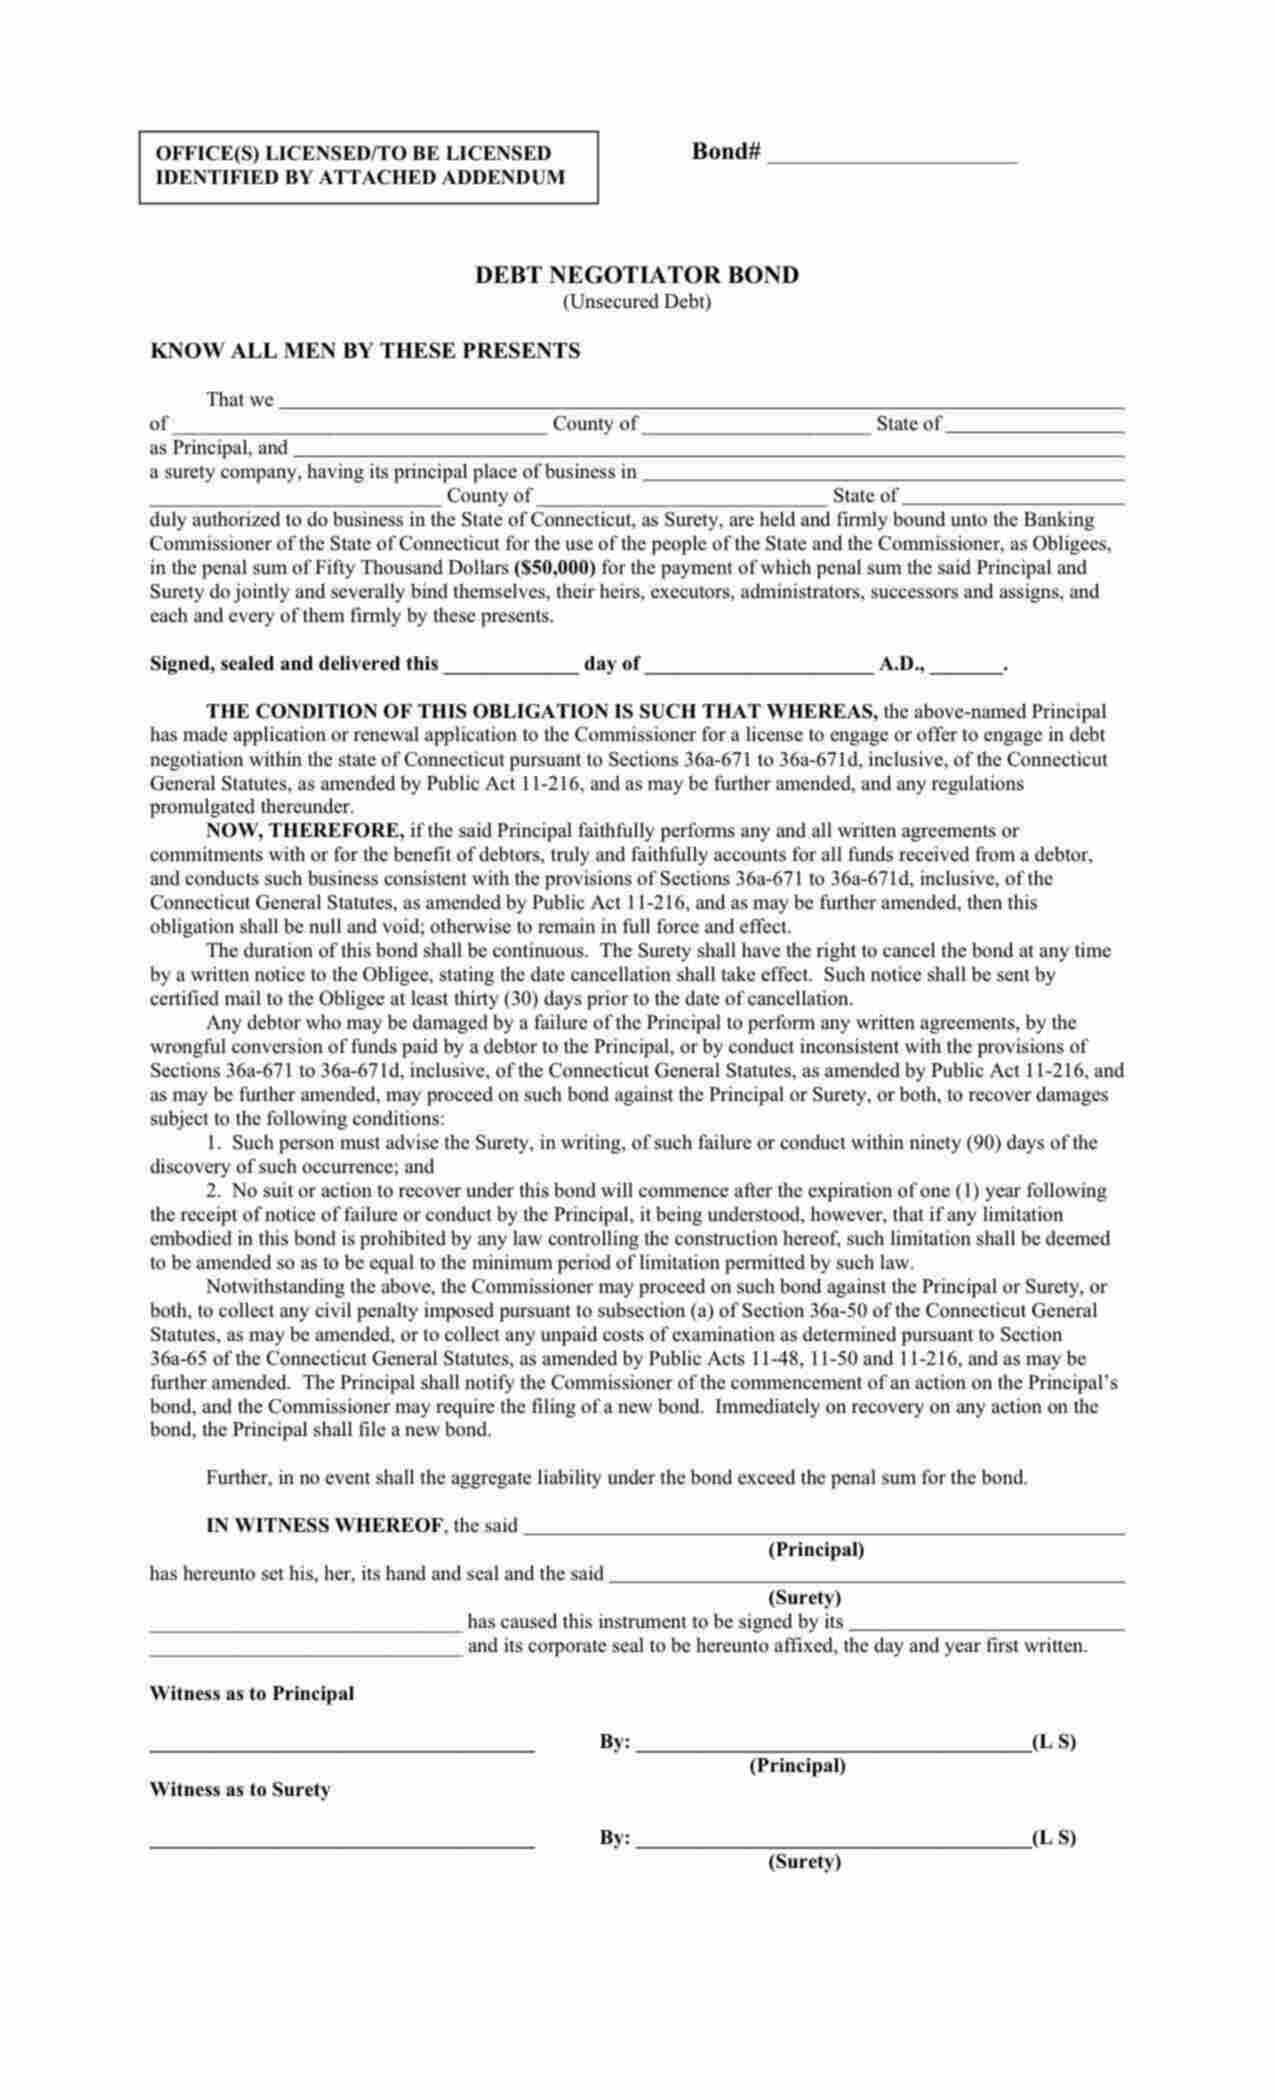 Connecticut Debt Negotiator (Unsecured Debt) Bond Form